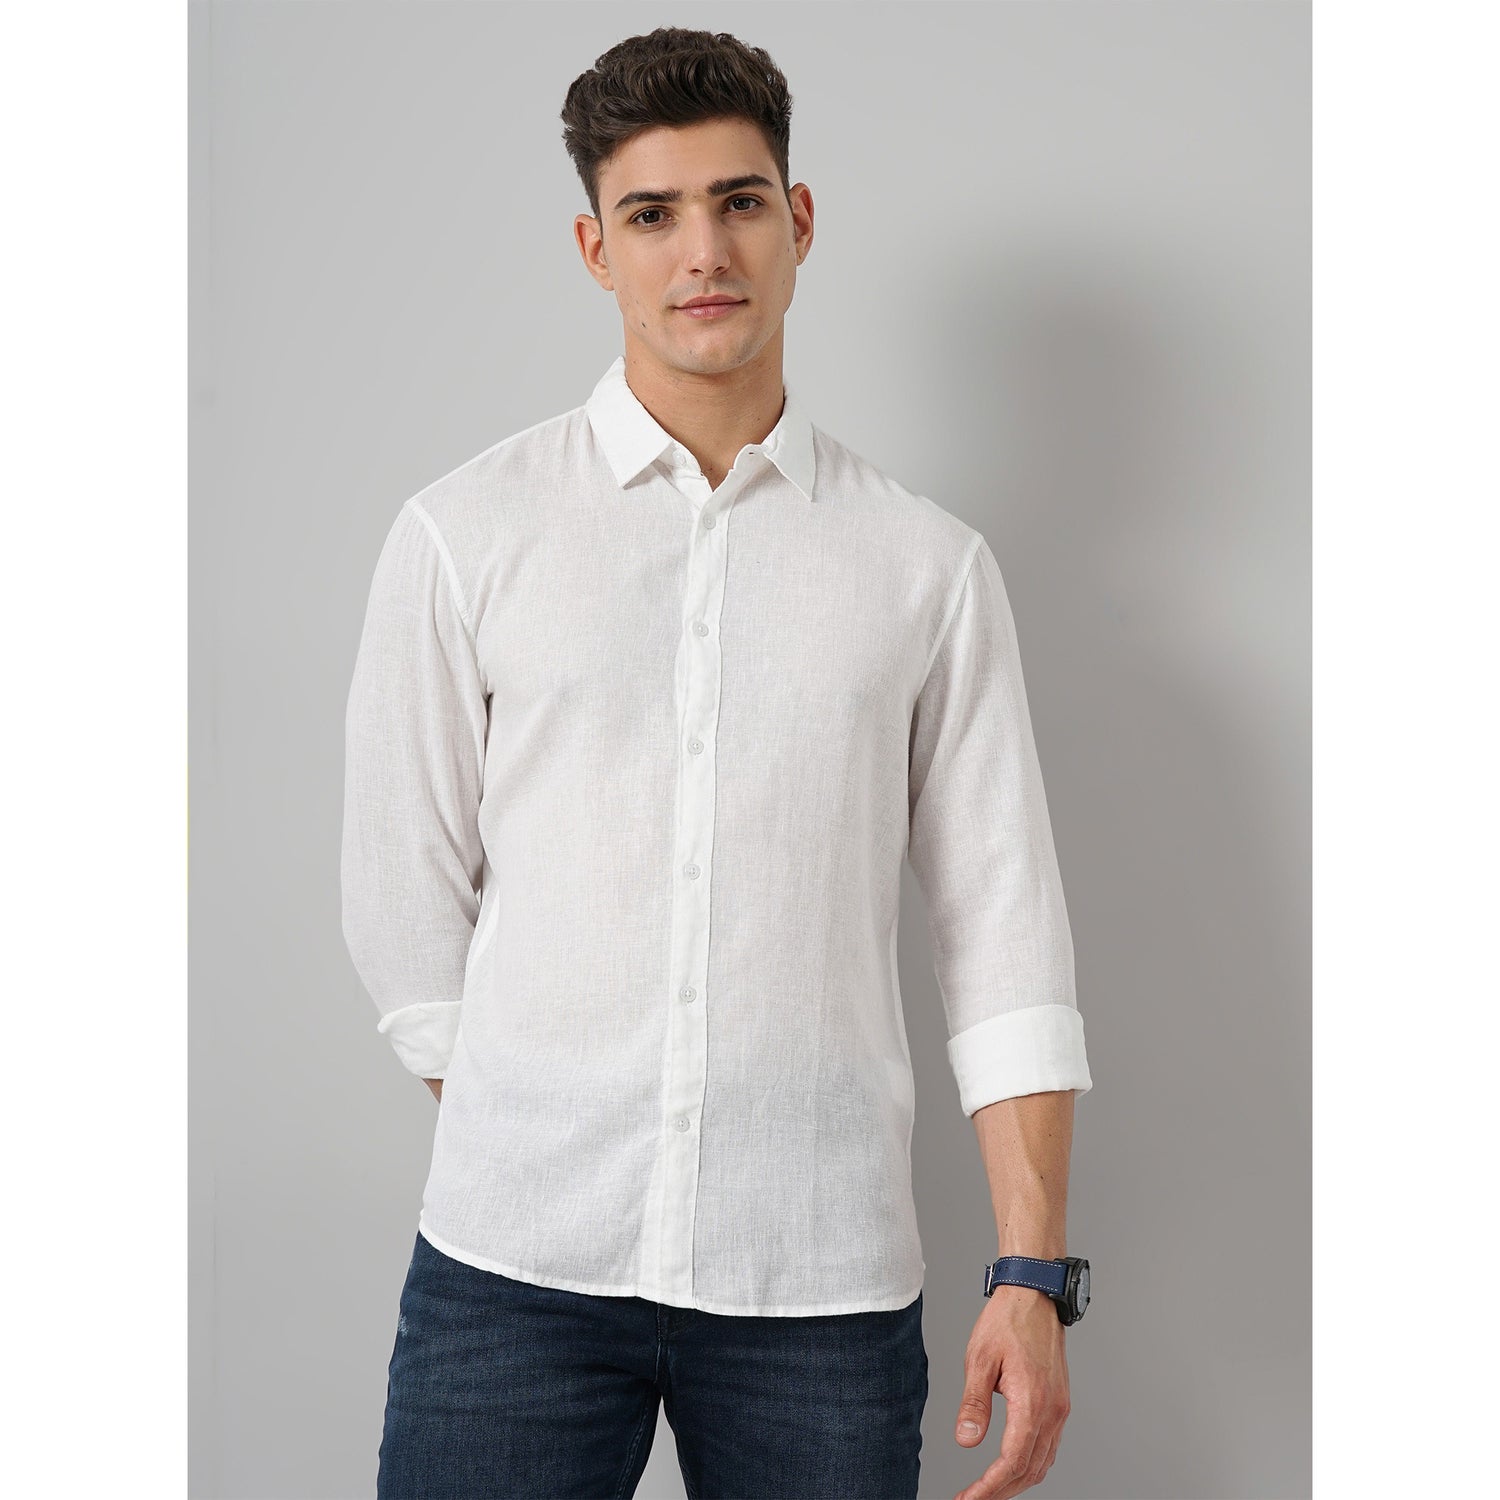 Solid White Lyocell Shirt (FAMODLIN)